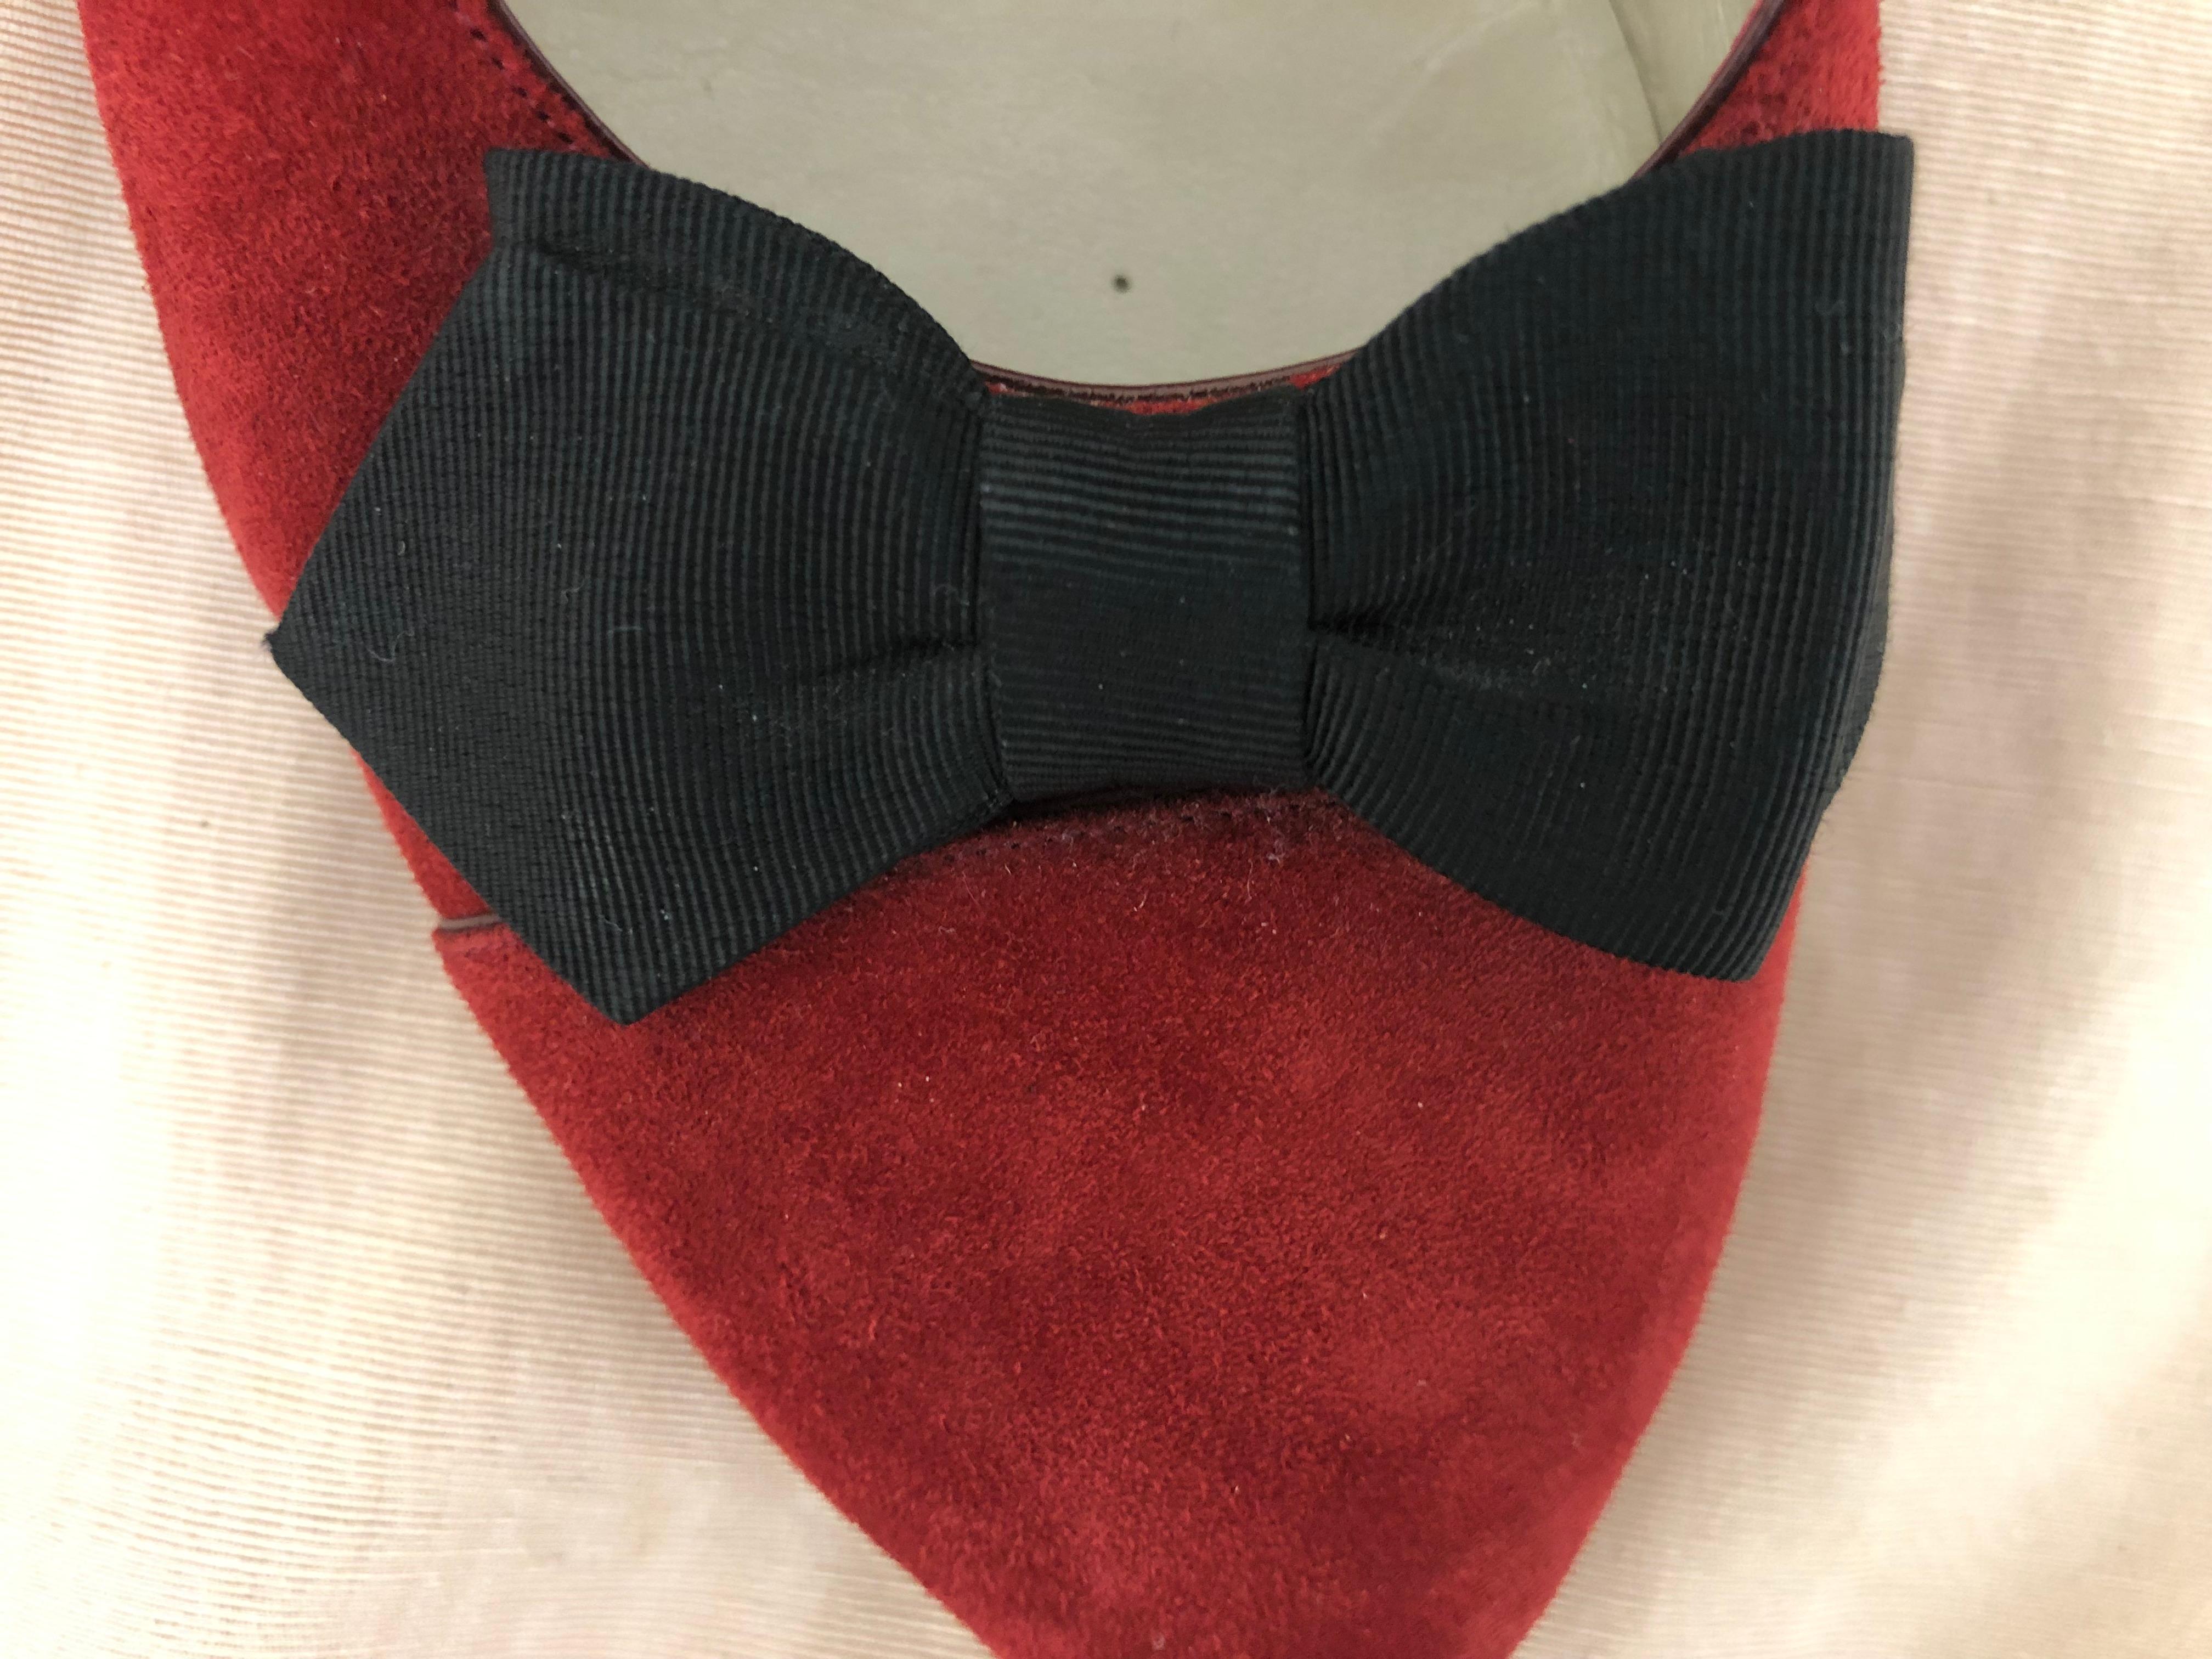 Vintage Chanel Red Suede Pumps w/Grosgrain Bows Size 8 1